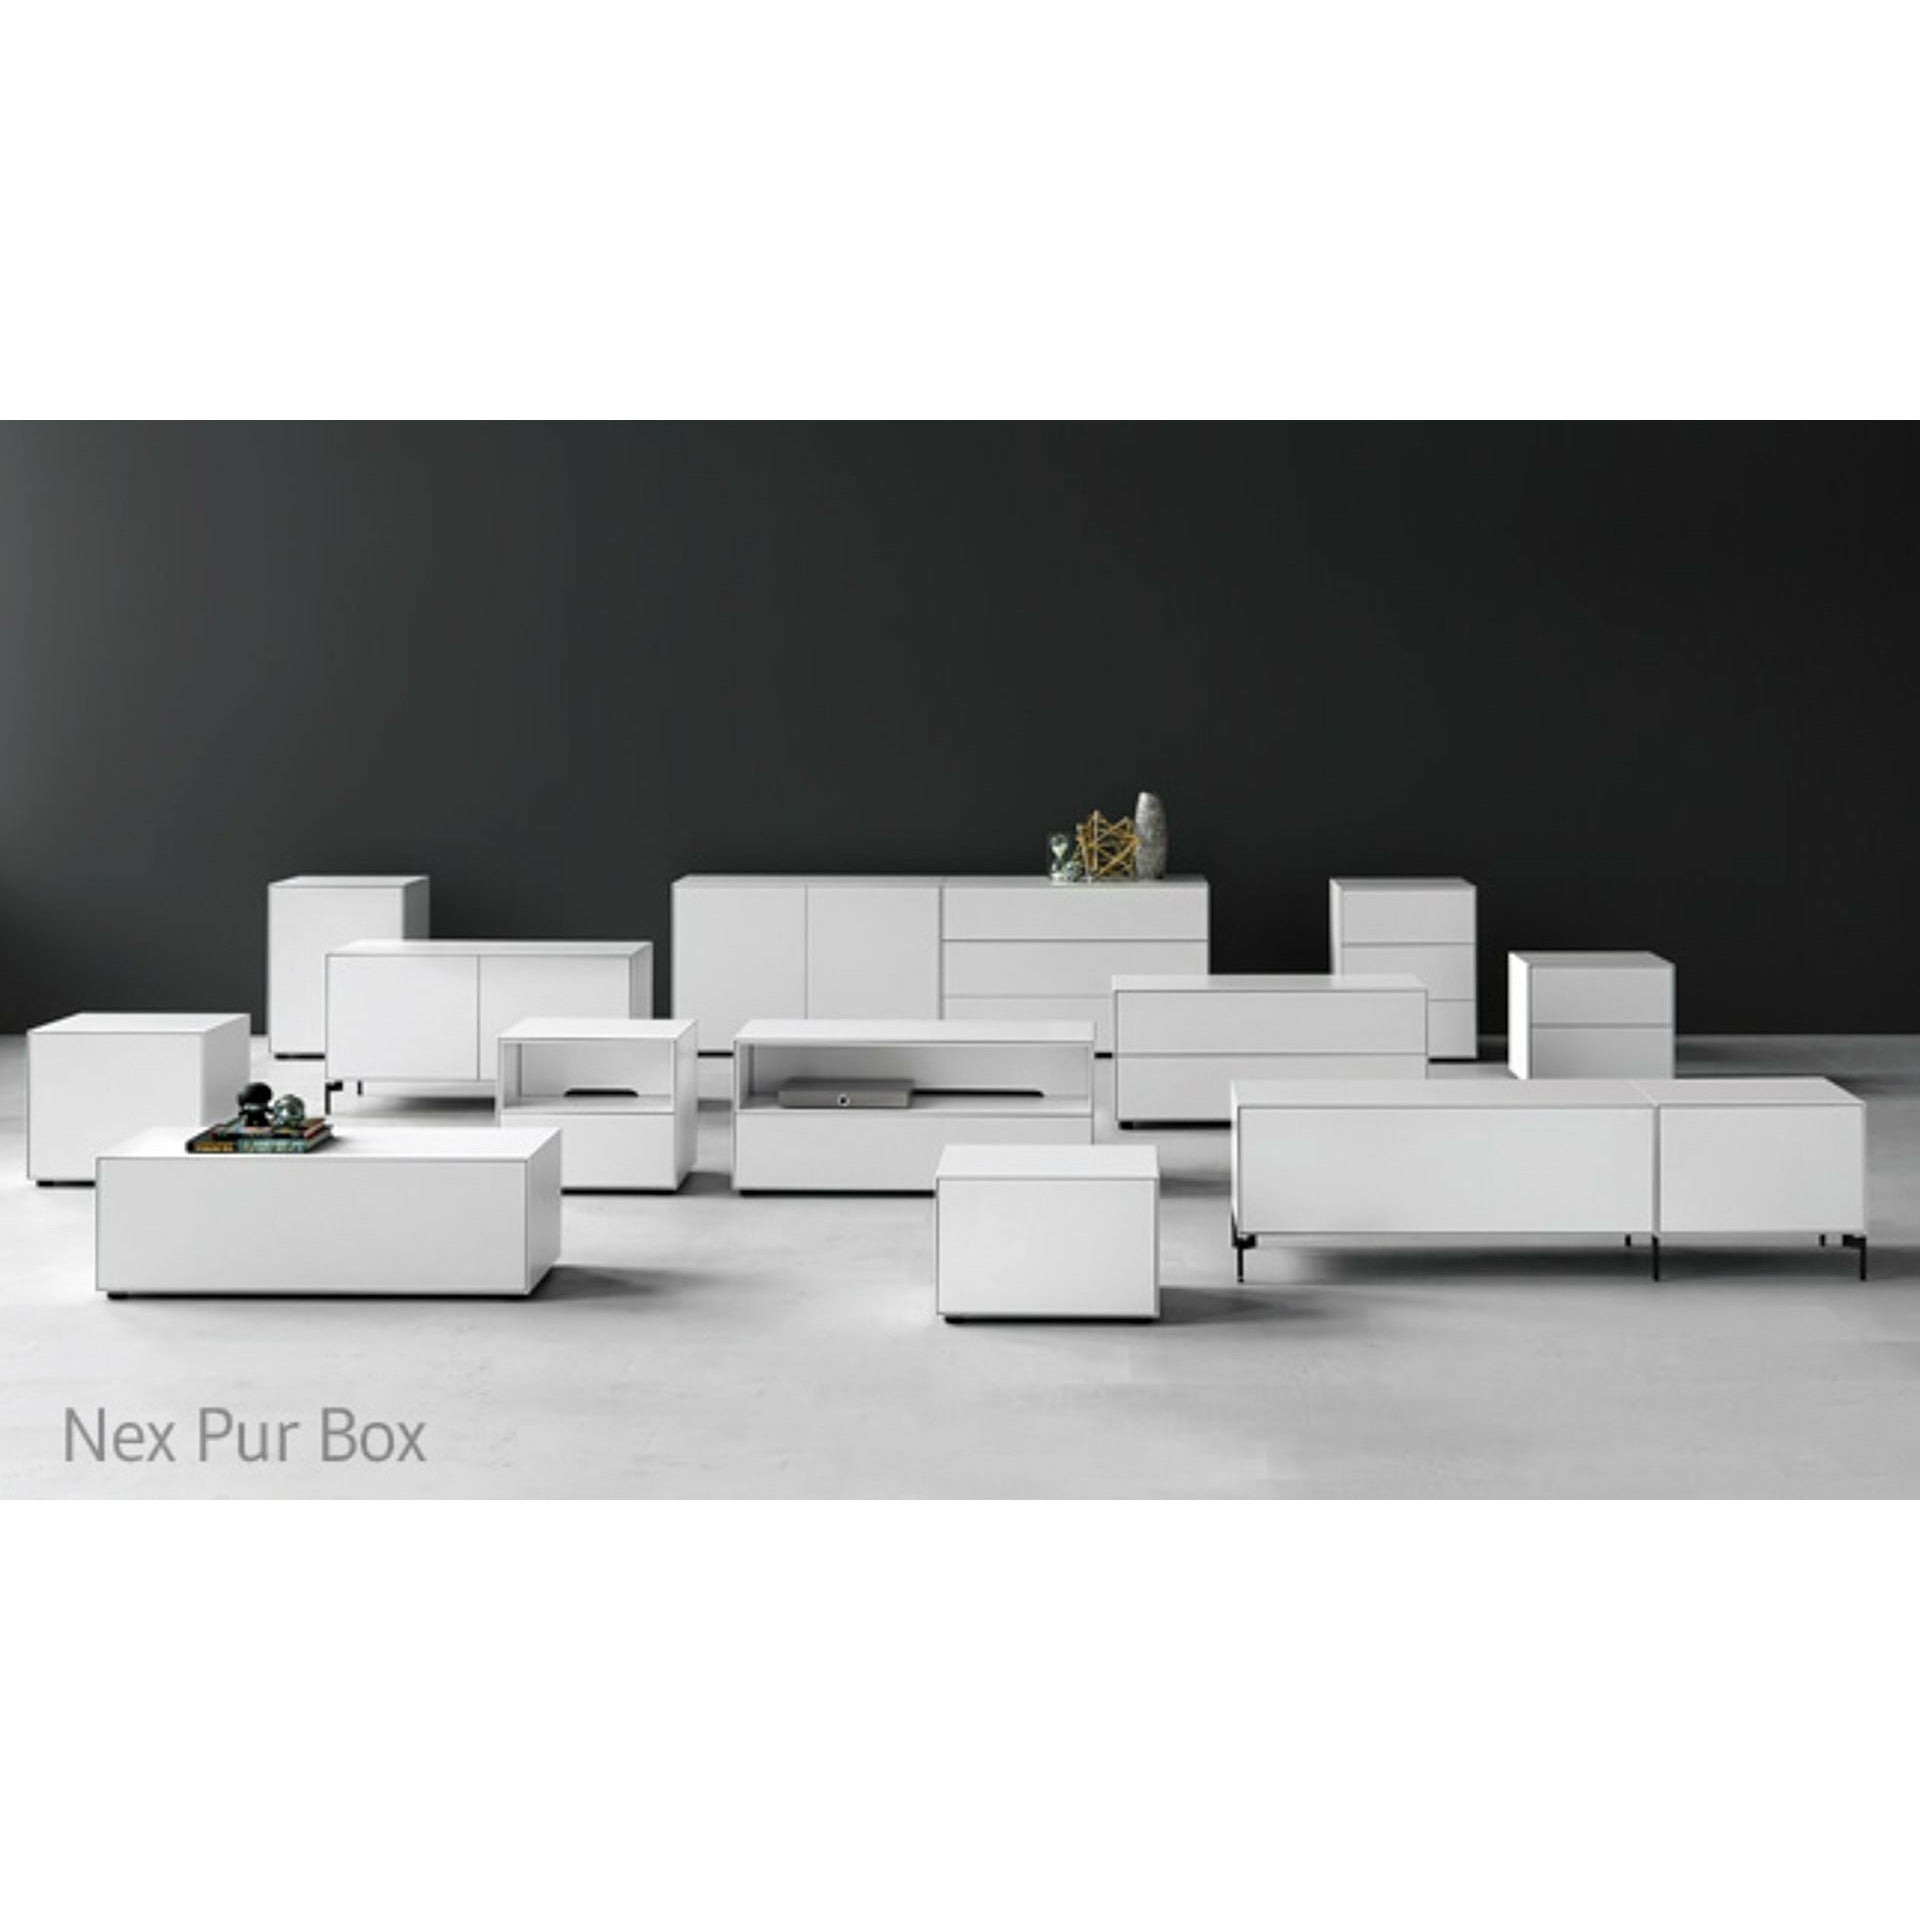 Piure Nex Pur Box Hx W 50x120 cm, 2 skuffer